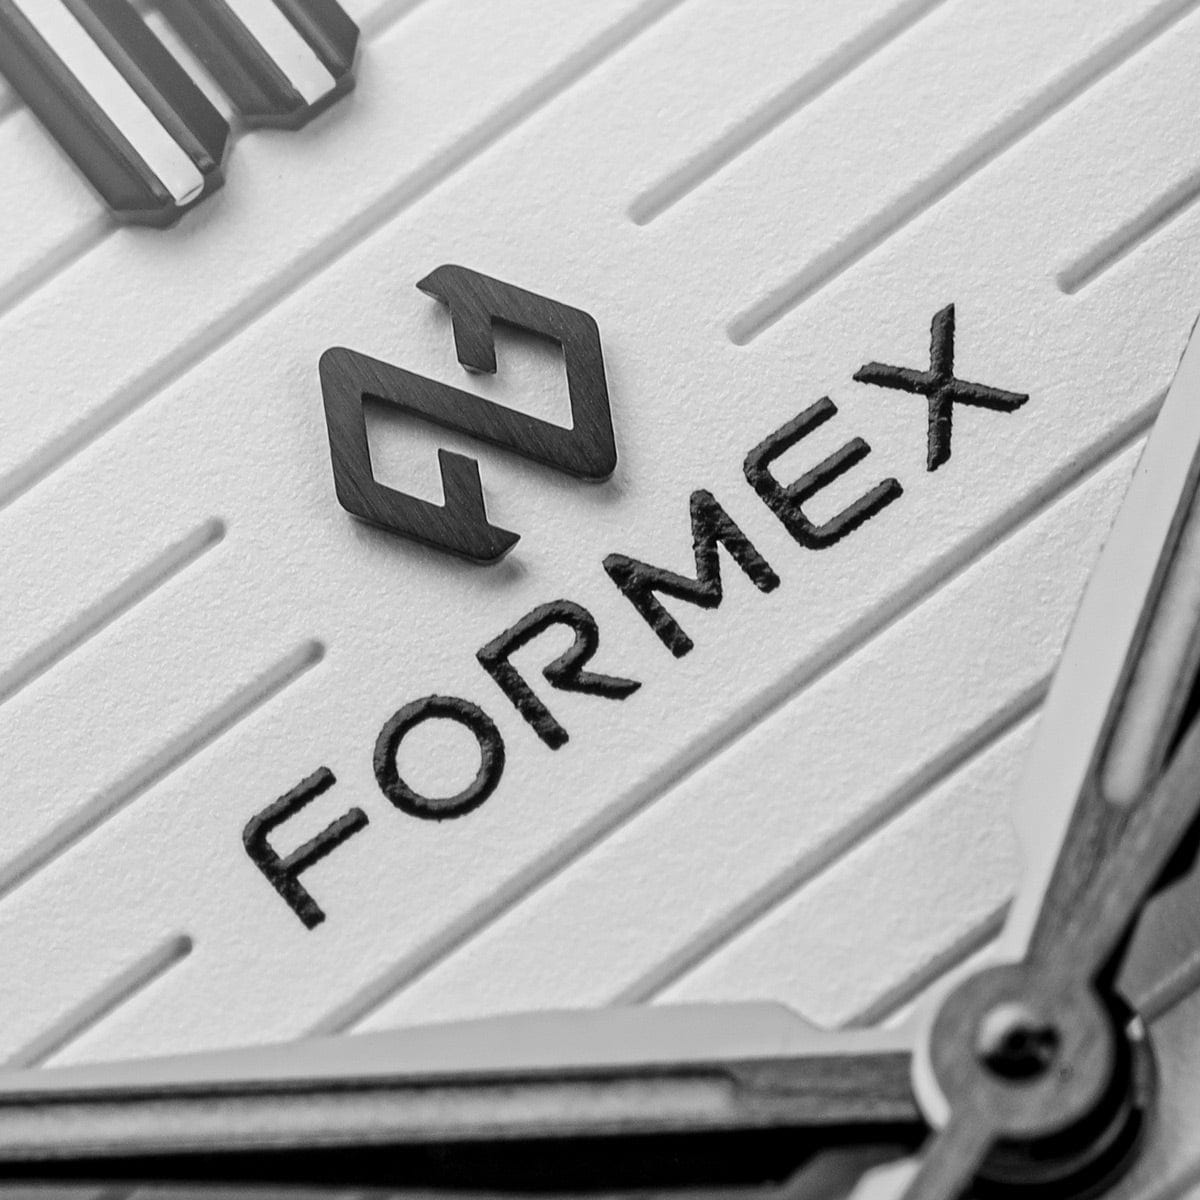 Formex Essence 39 Automatic Chronometer Watch - White / Steel Bracelet